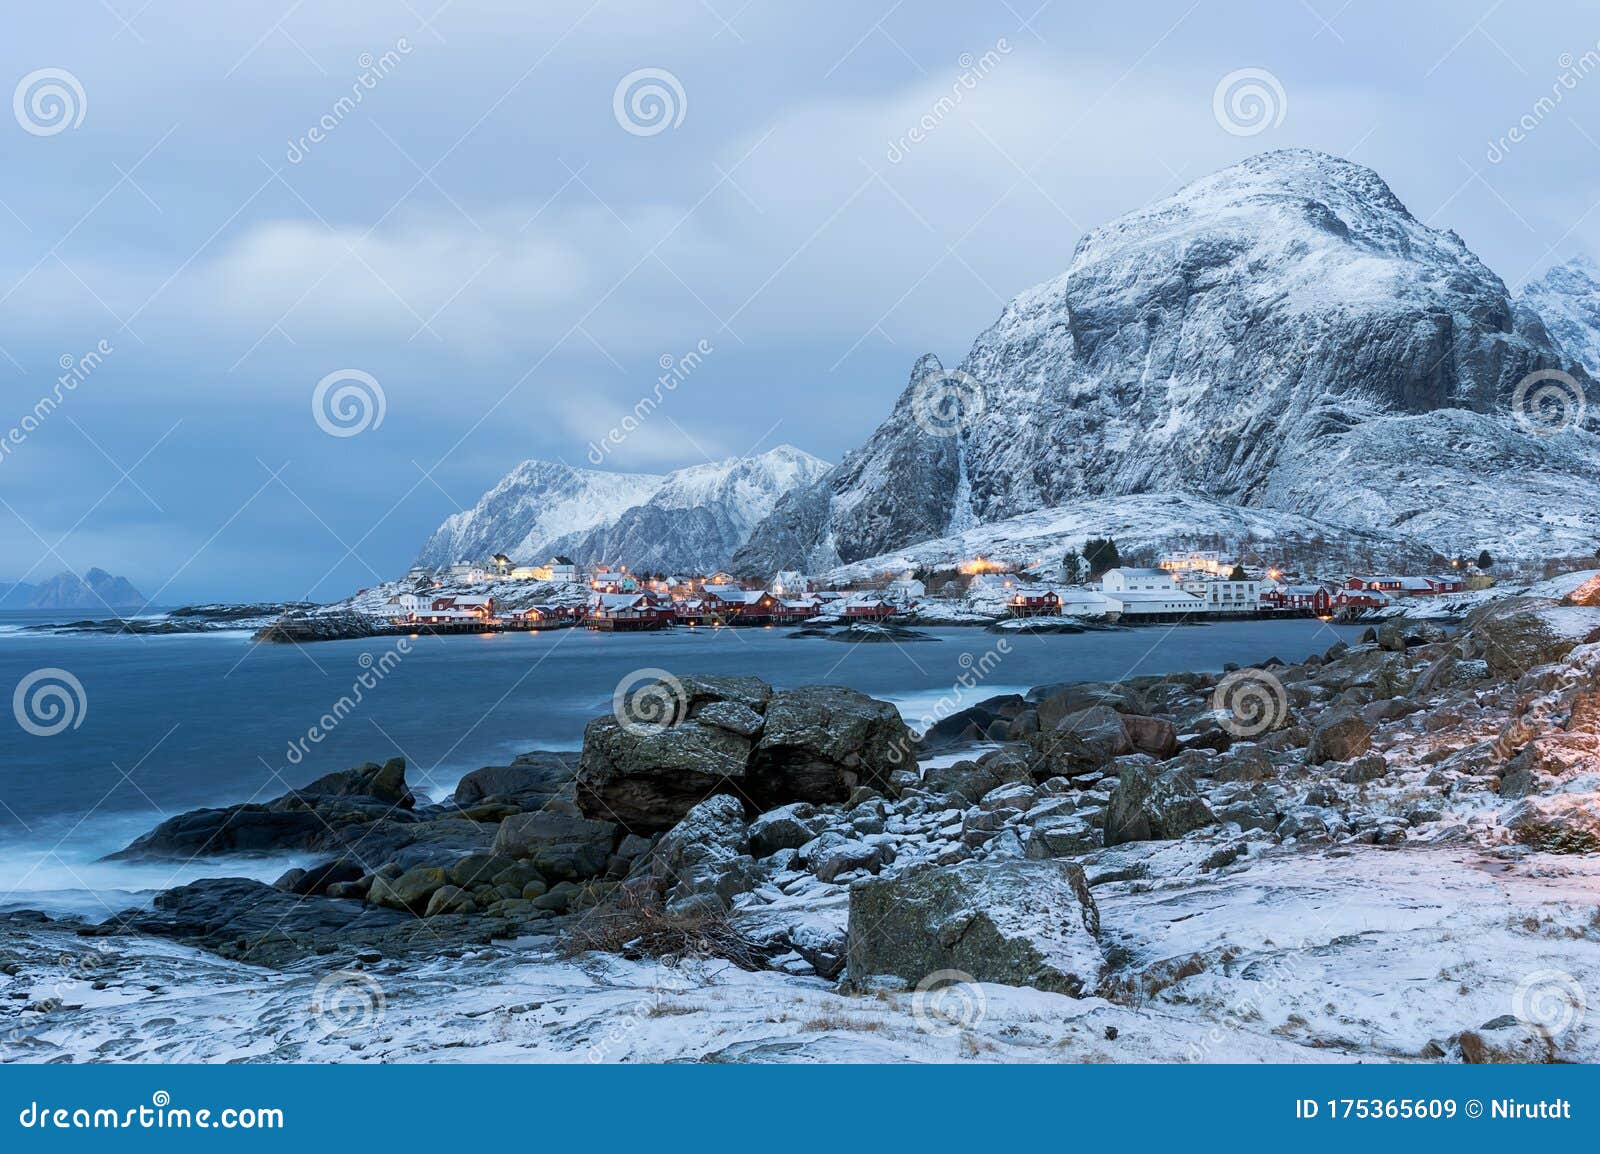 Escandinávia: características e curiosidades - Portal de Inverno